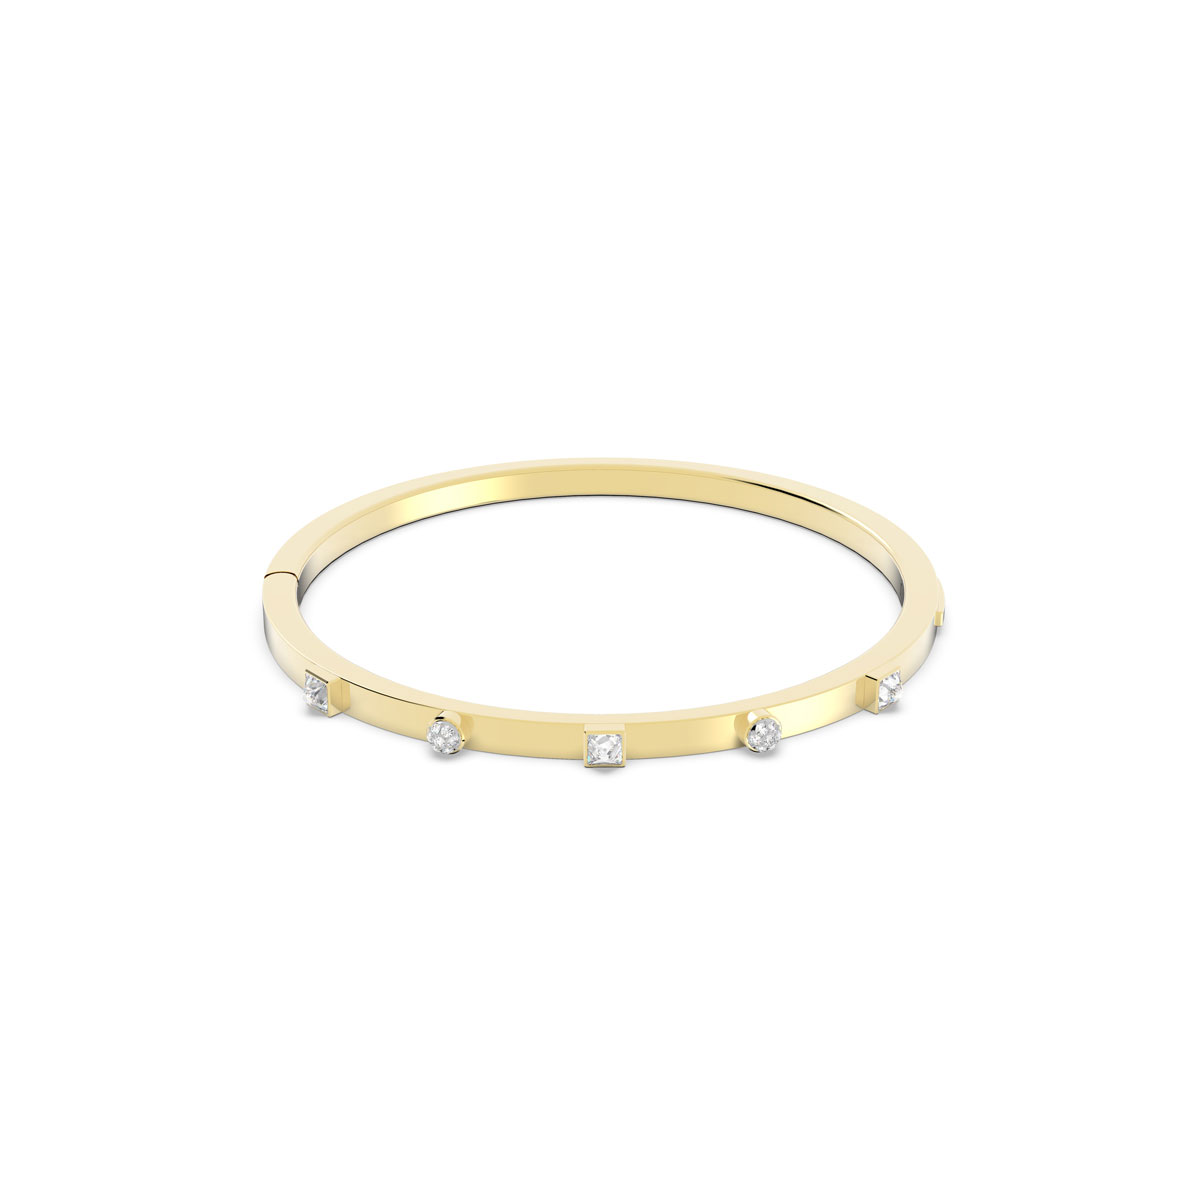 Swarovski White and Gold Thrilling Bangle Bracelet